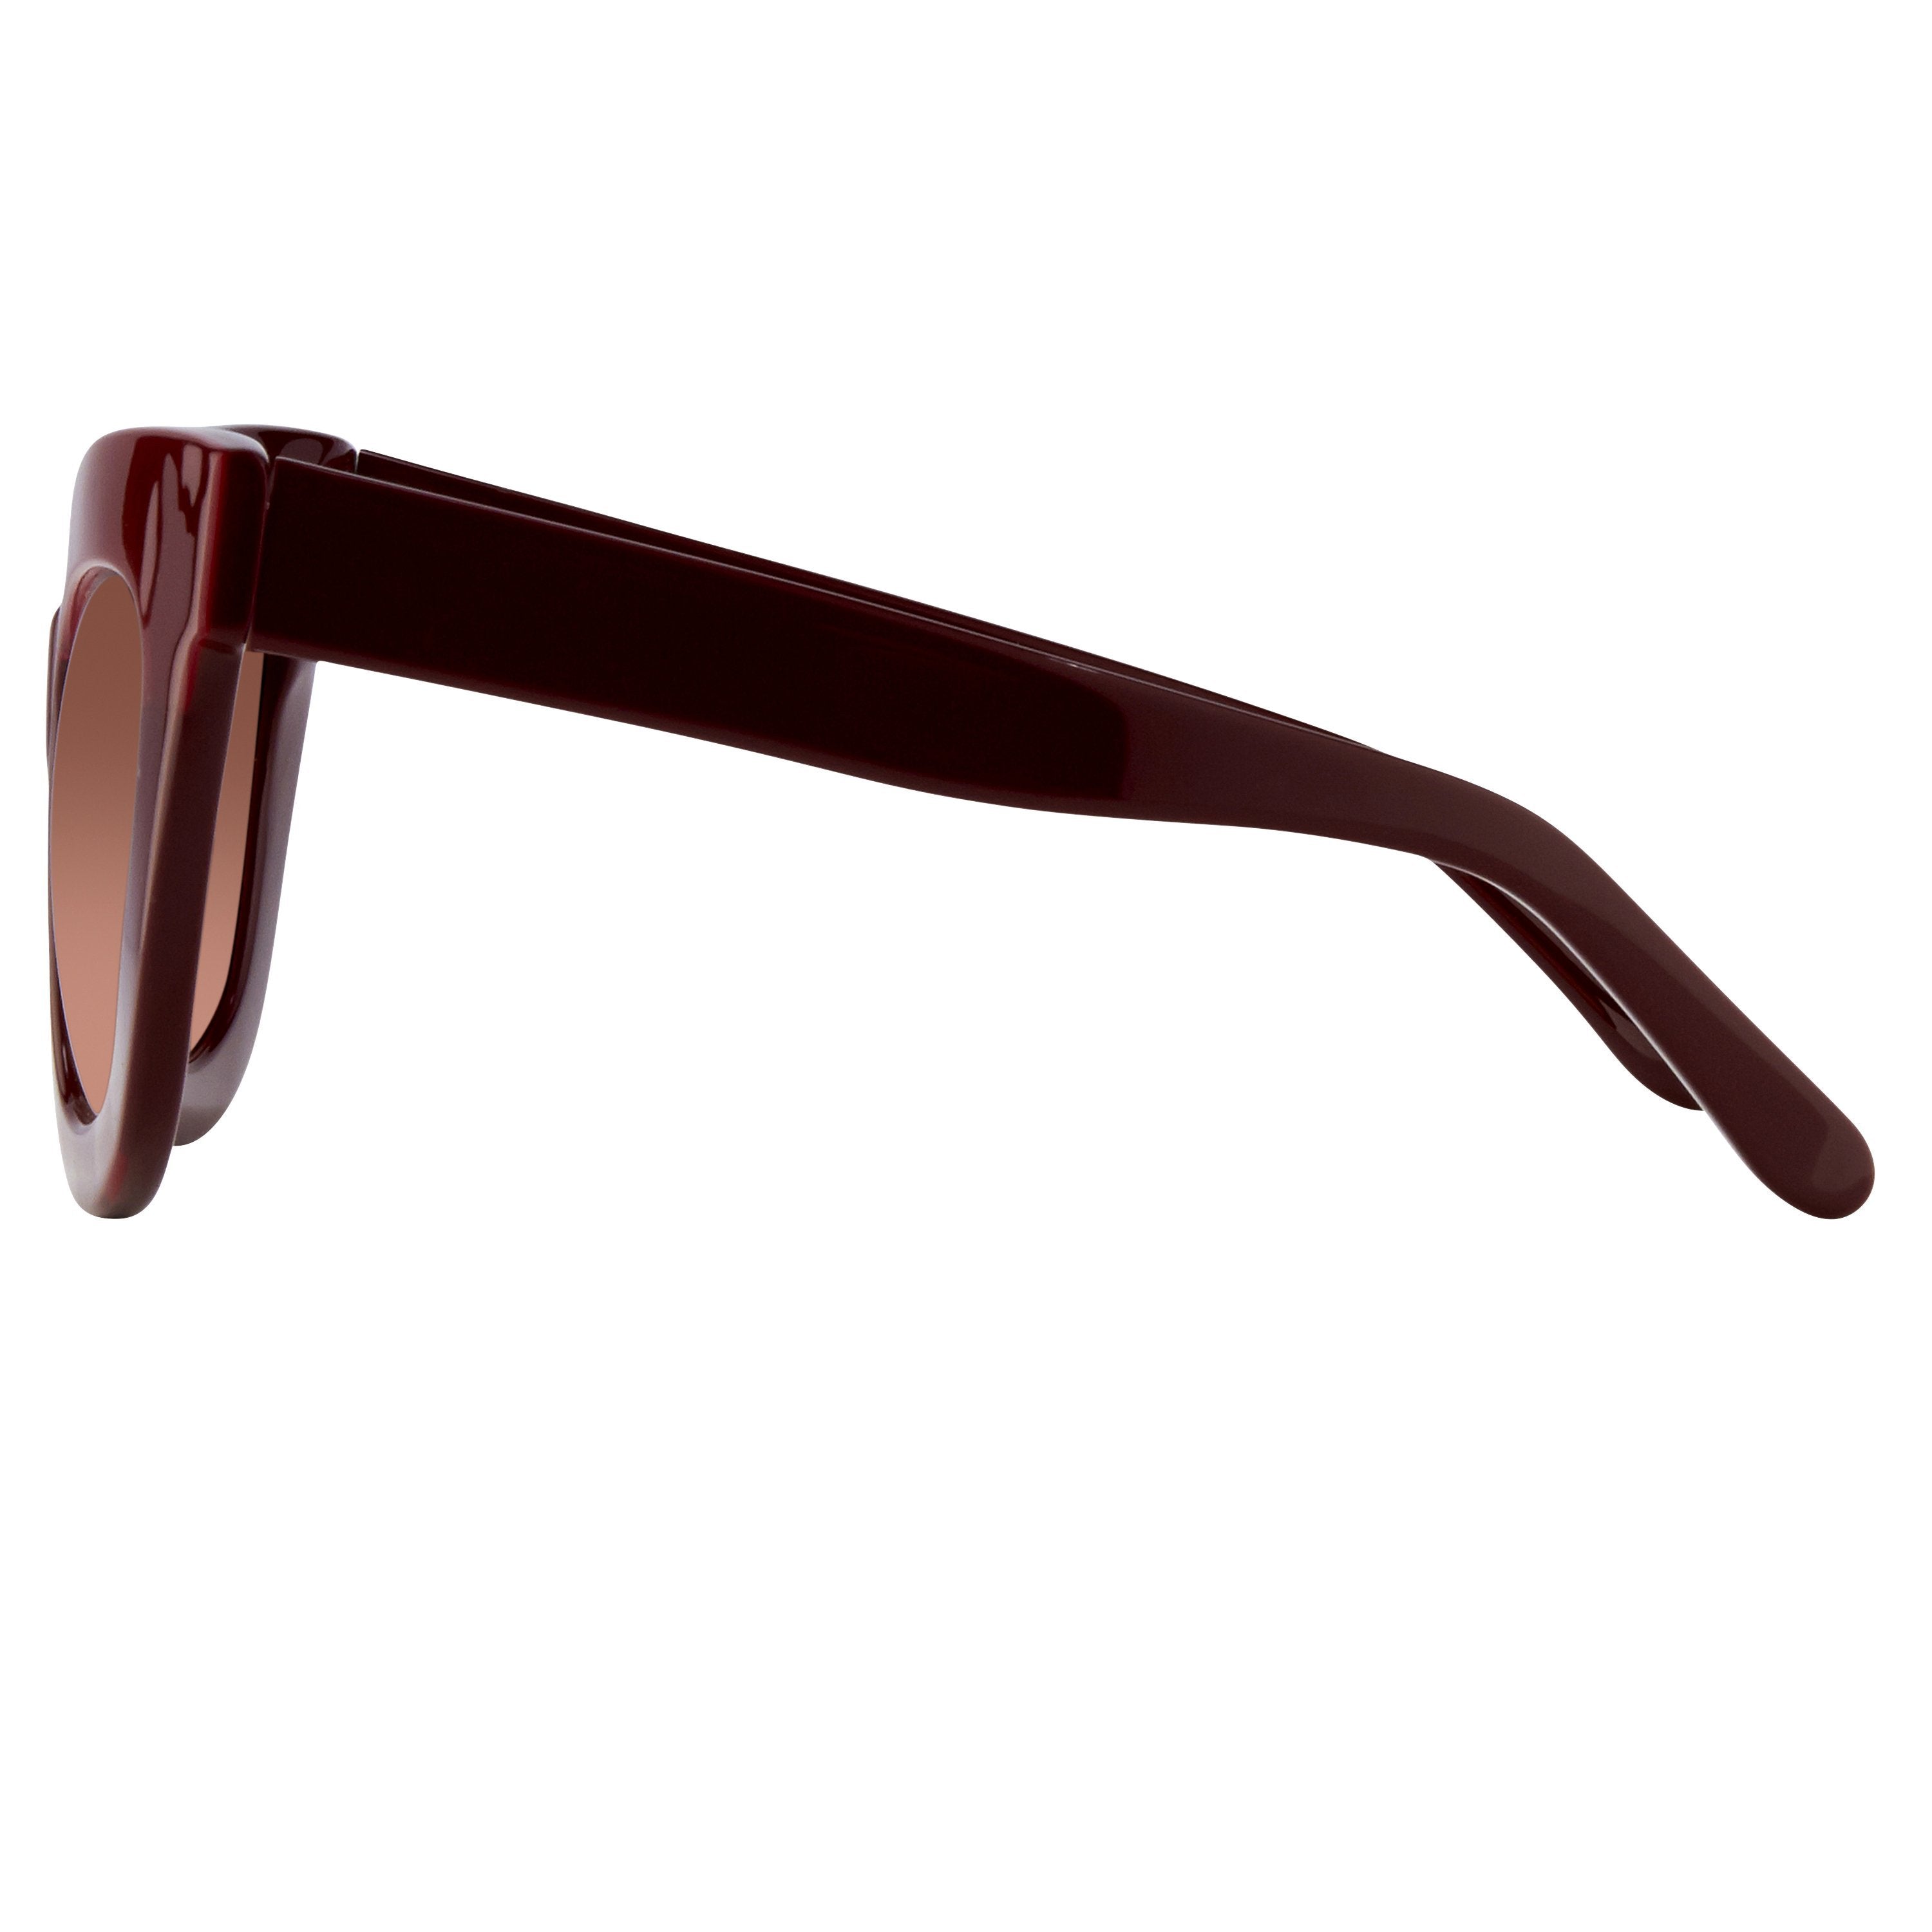 Color_EDM20C2SUN - Erdem 20 C2 Cat Eye Sunglasses